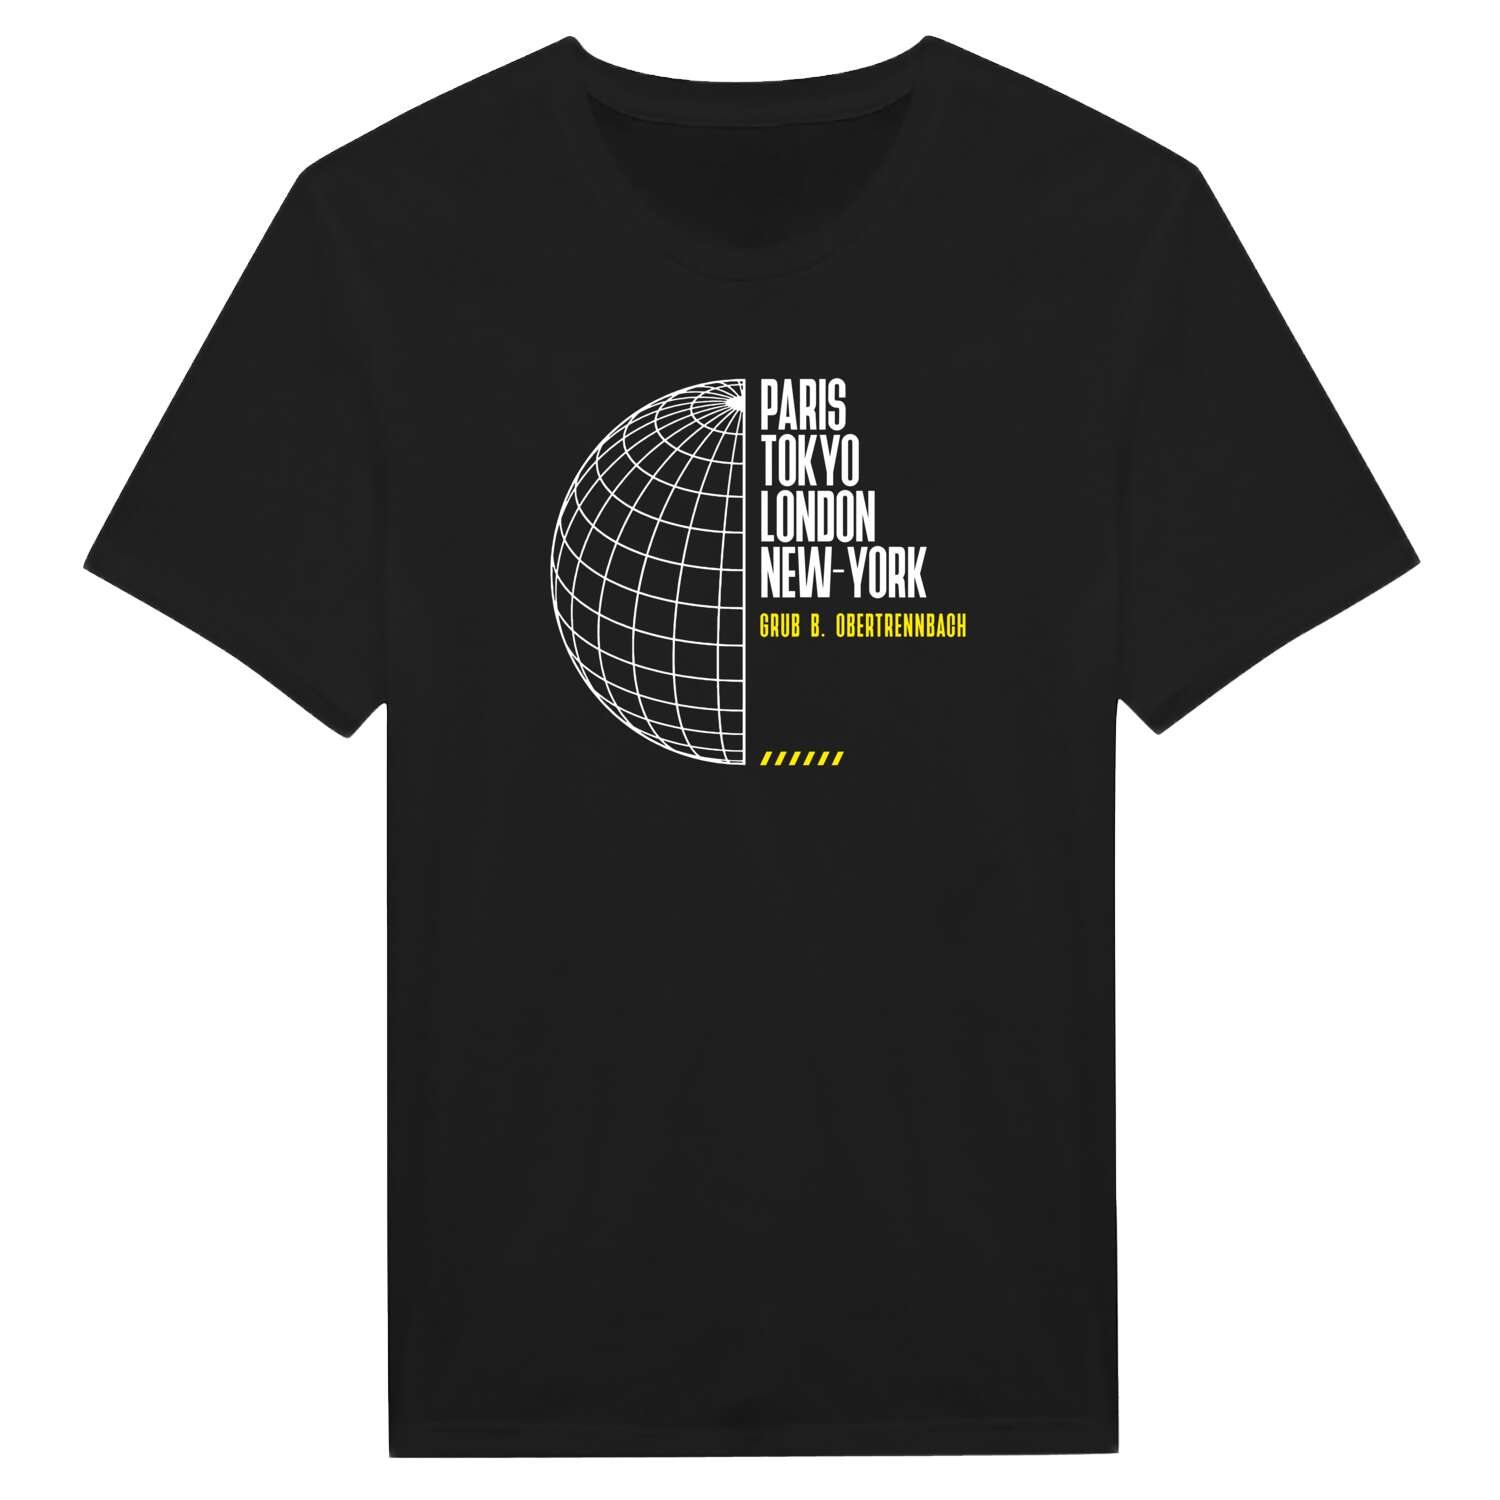 Grub b. Obertrennbach T-Shirt »Paris Tokyo London«